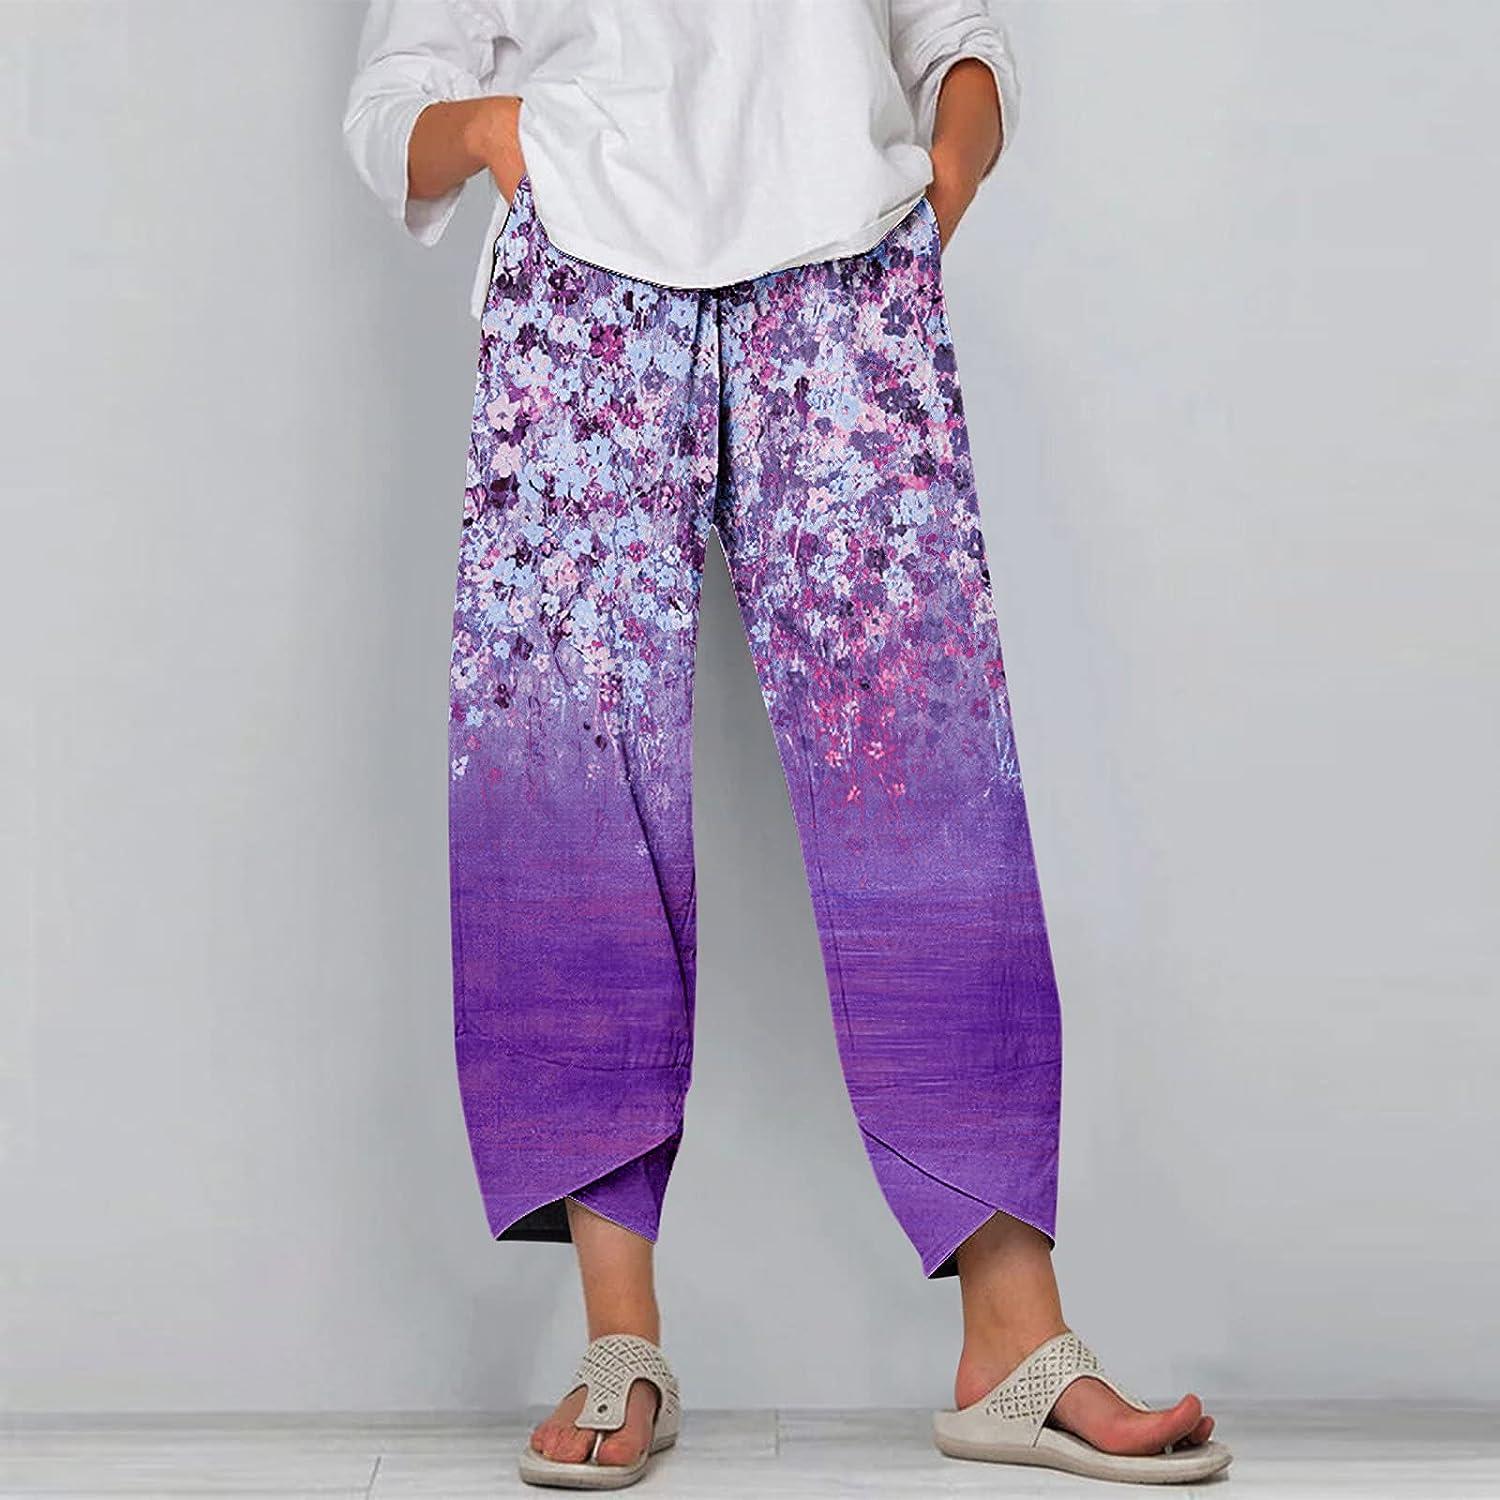 Boho Cropped Pants for Women,Women's Casual Summer Capri Pants Cotton Linen  Print Wide Leg Ankle Pants with Pockets P01-purple X-Large